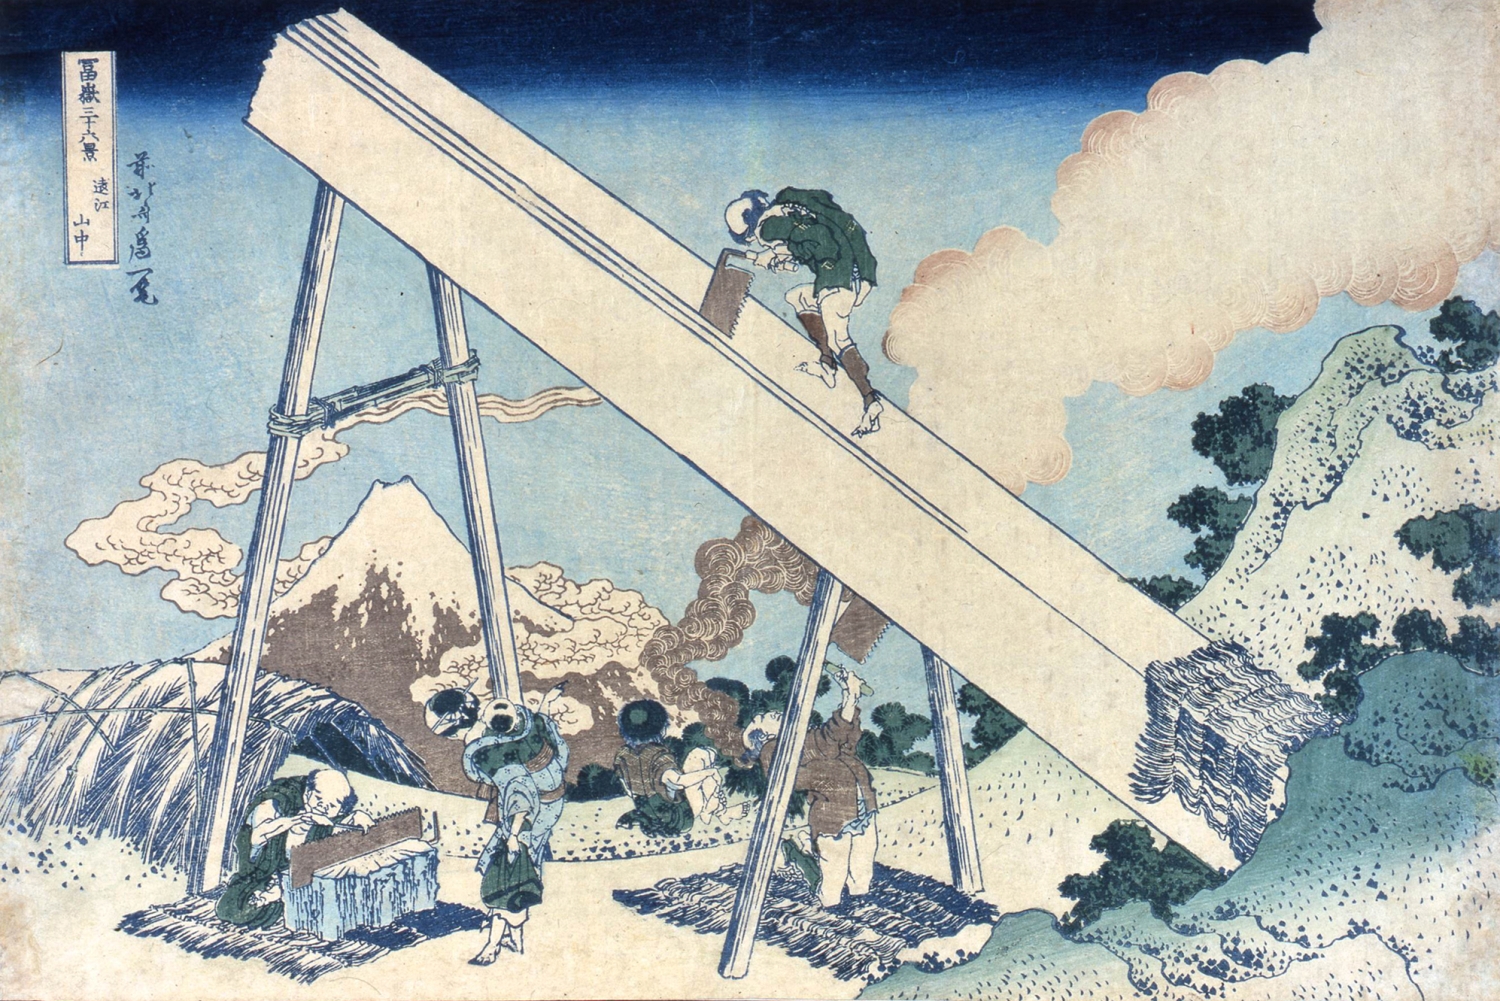 Katsushika Hokusai, In the Mountains of Totomi Province, from the series Thirty-six Views of Mount Fuji, Sumida Hokusai Museum